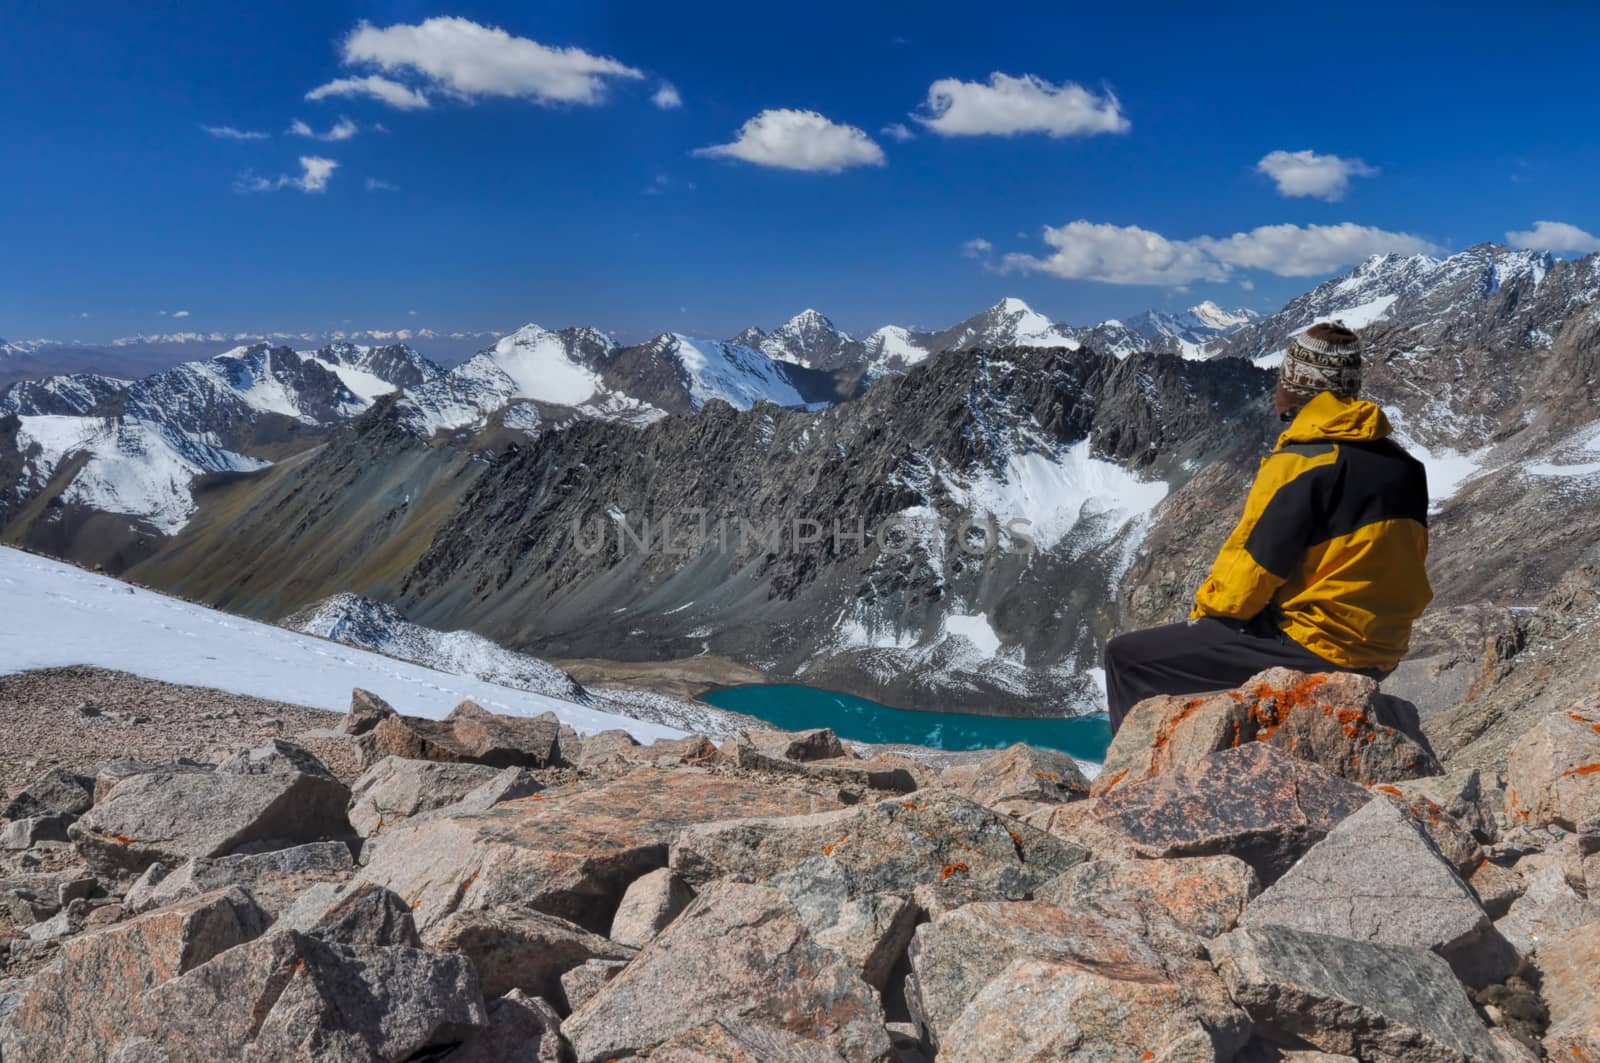 On summit in Kyrgyzstan by MichalKnitl